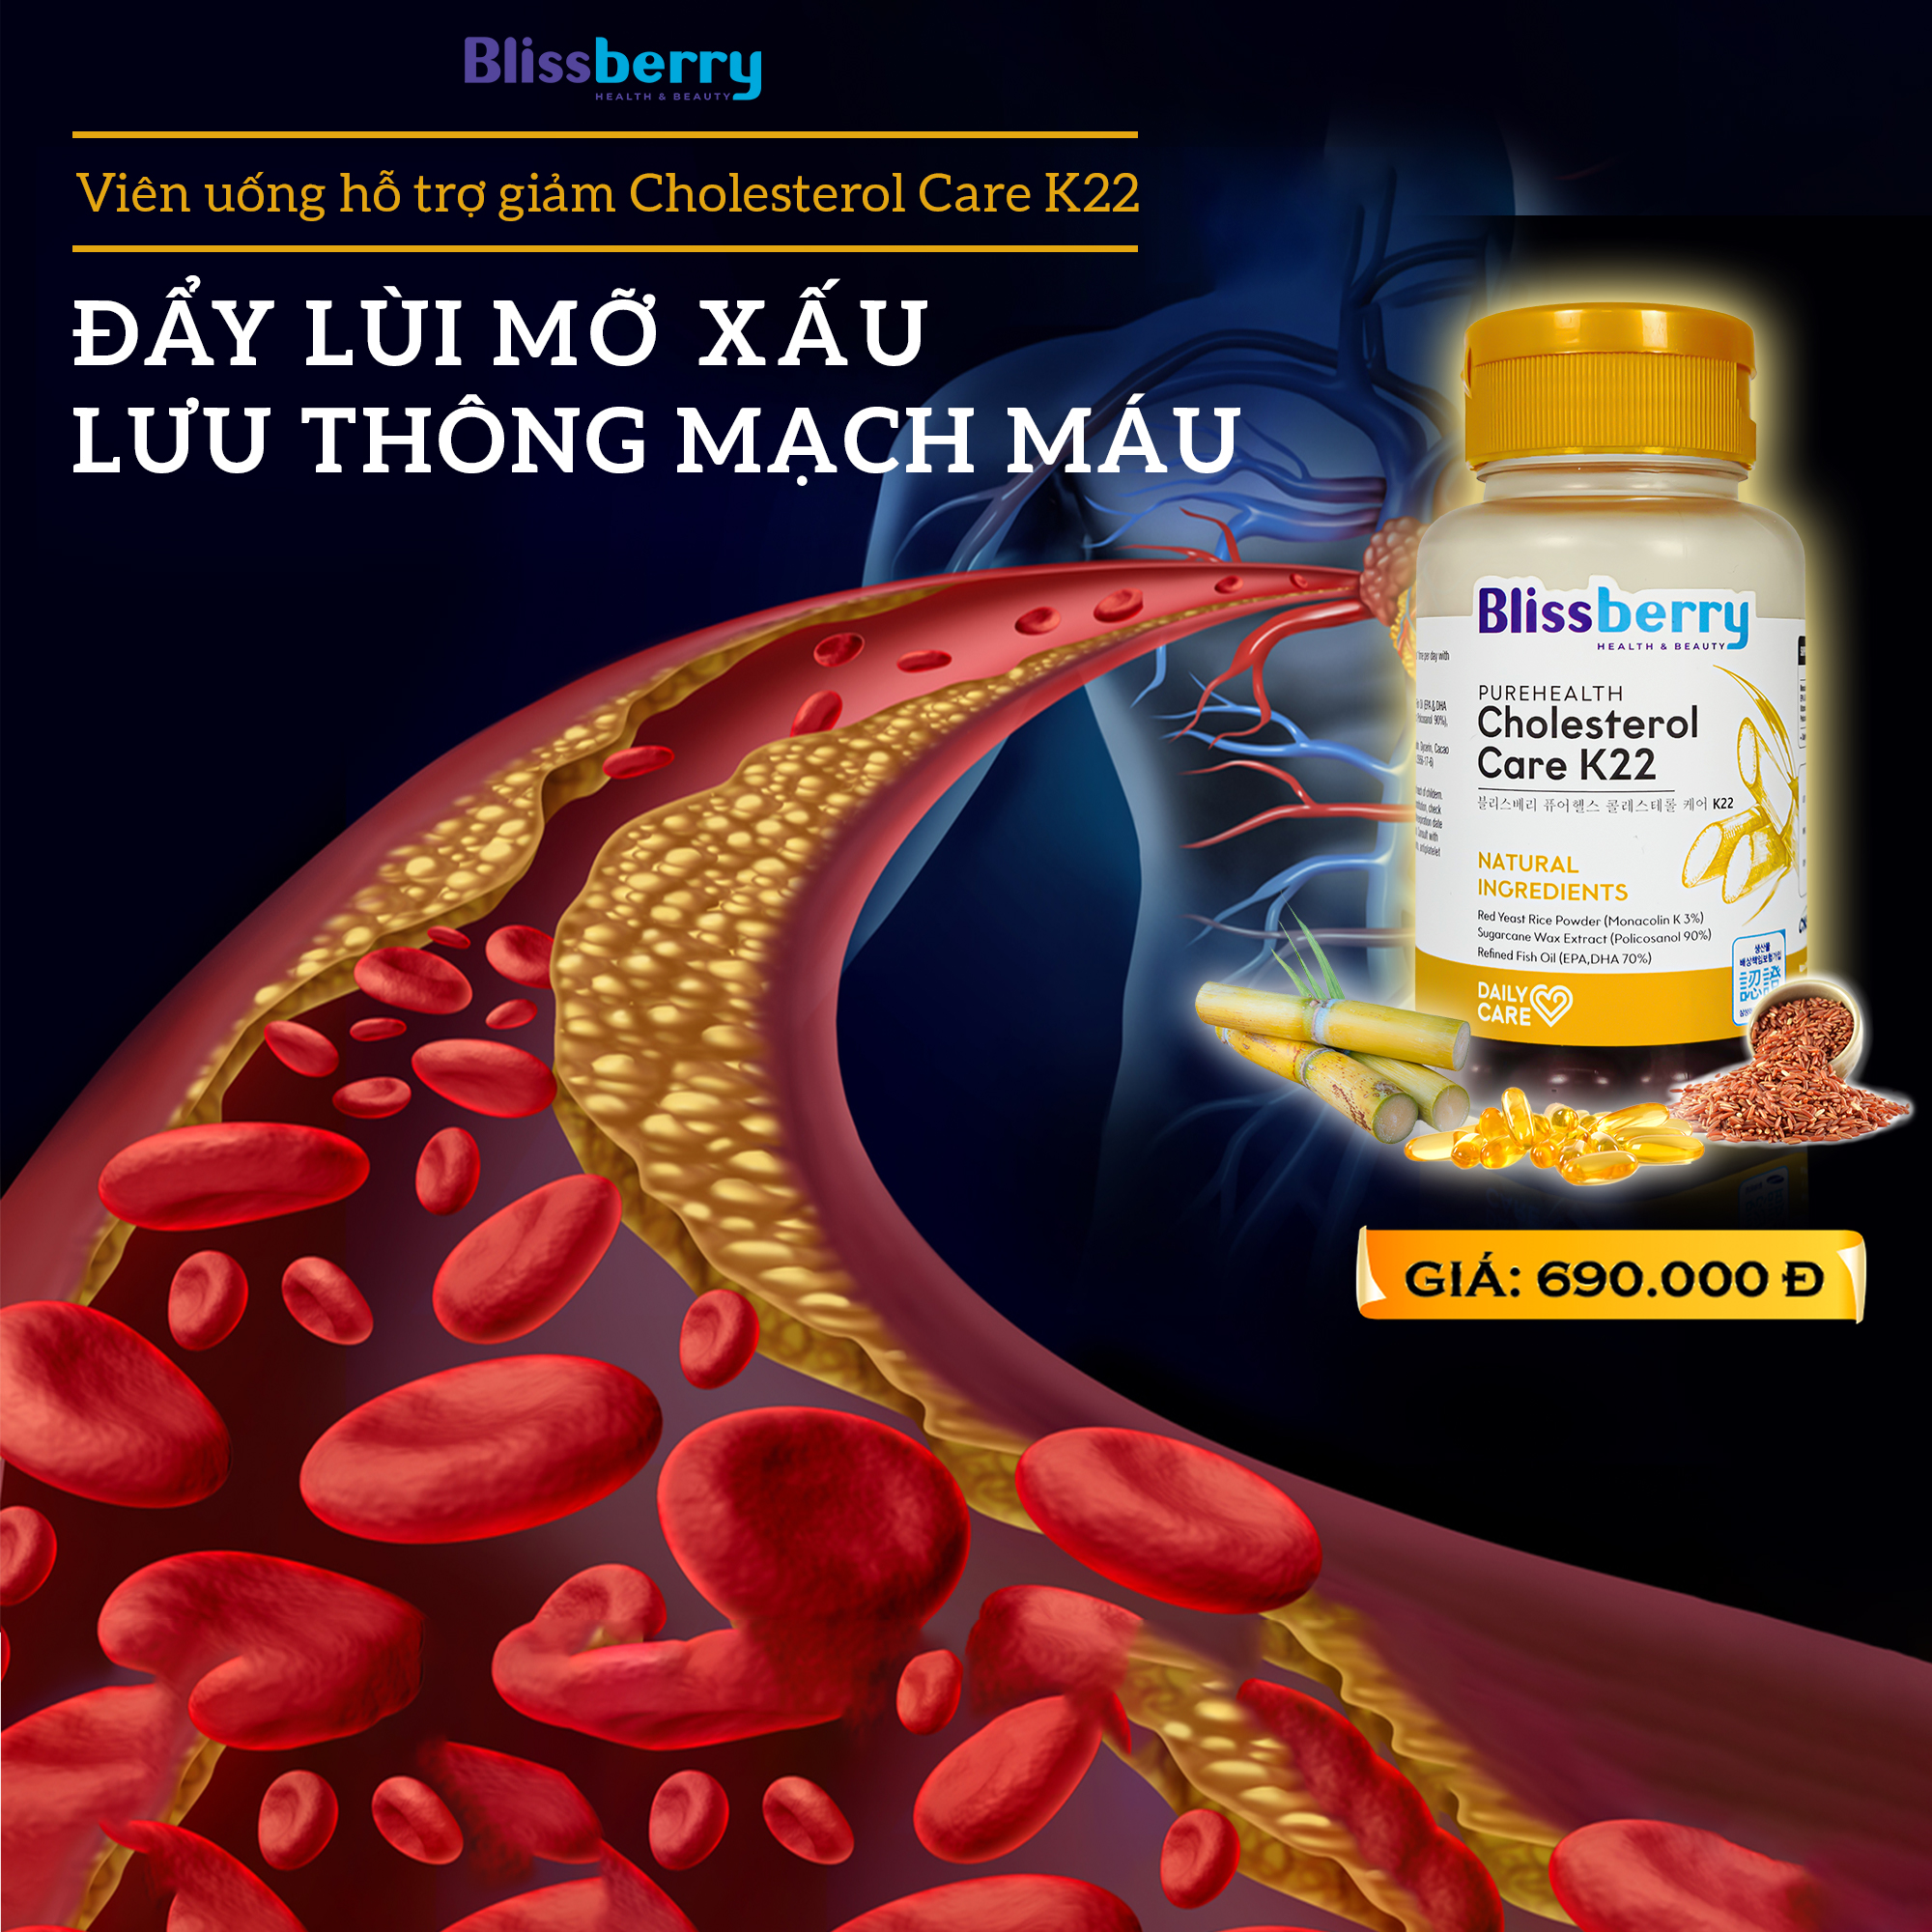 Viên uống giảm Cholesterol Blissberry Purehealth Cholesterol Care K22